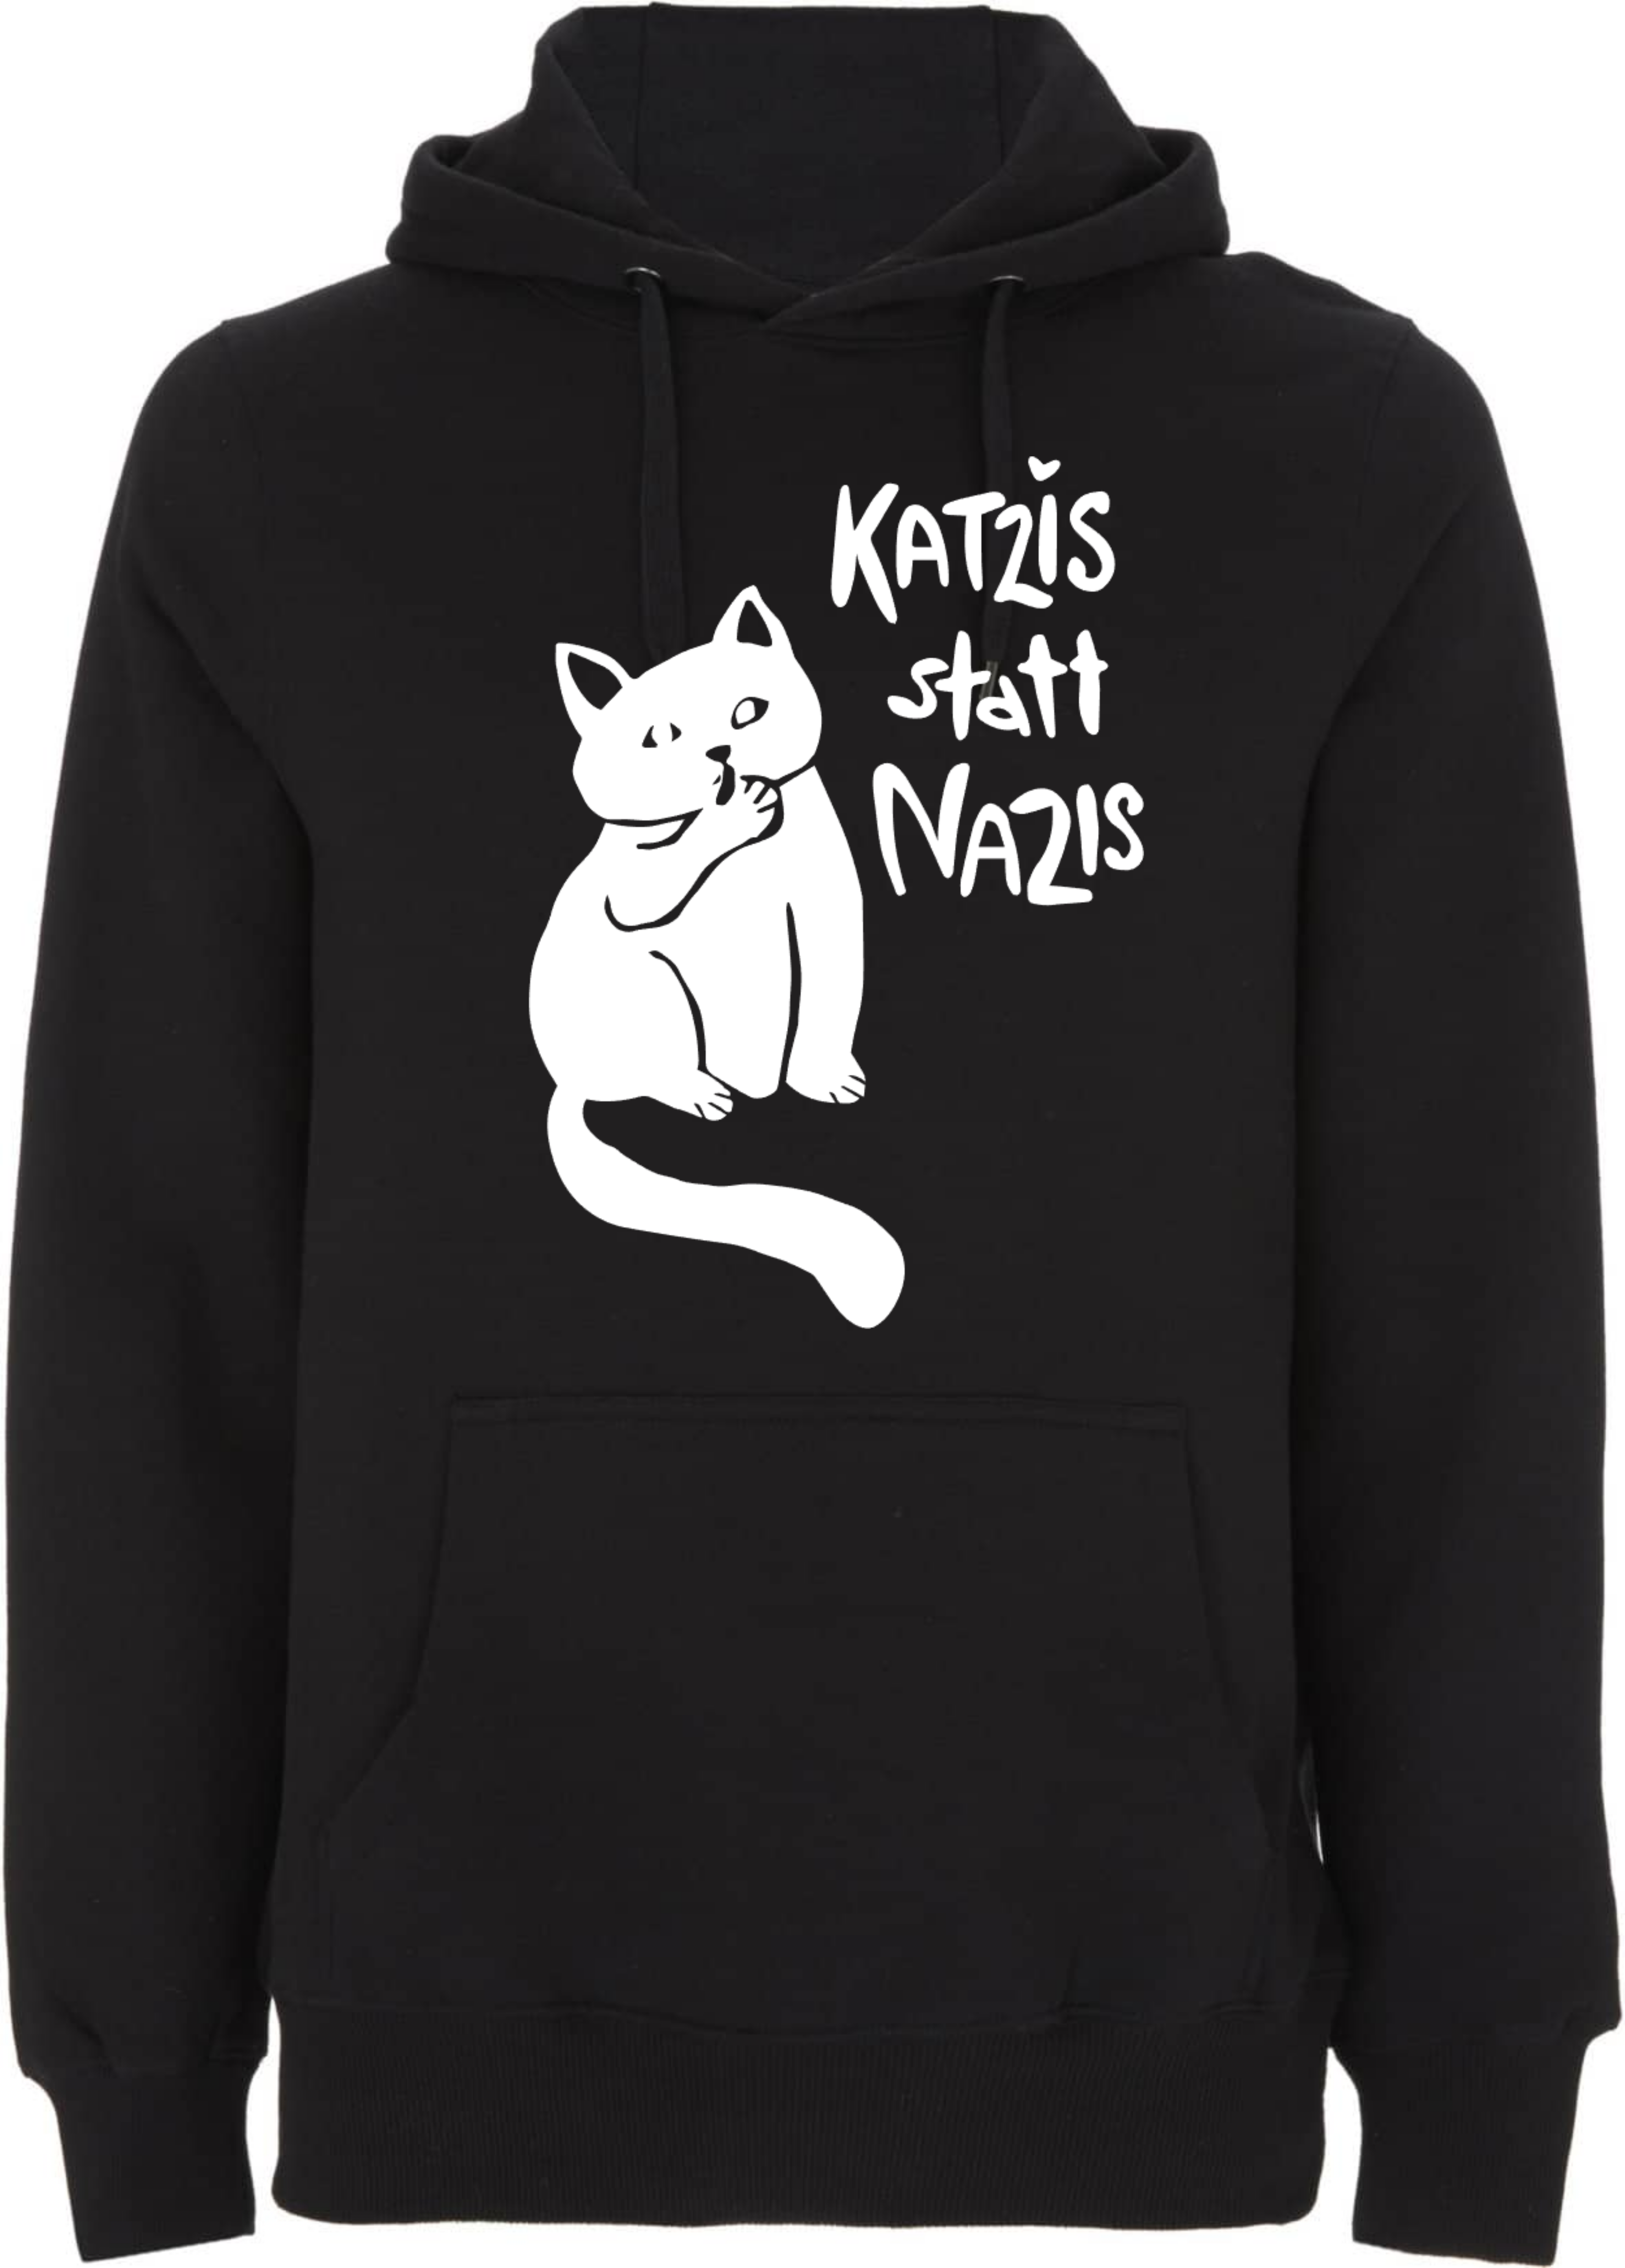 Katzis statt Nazis | Unisex Pullover